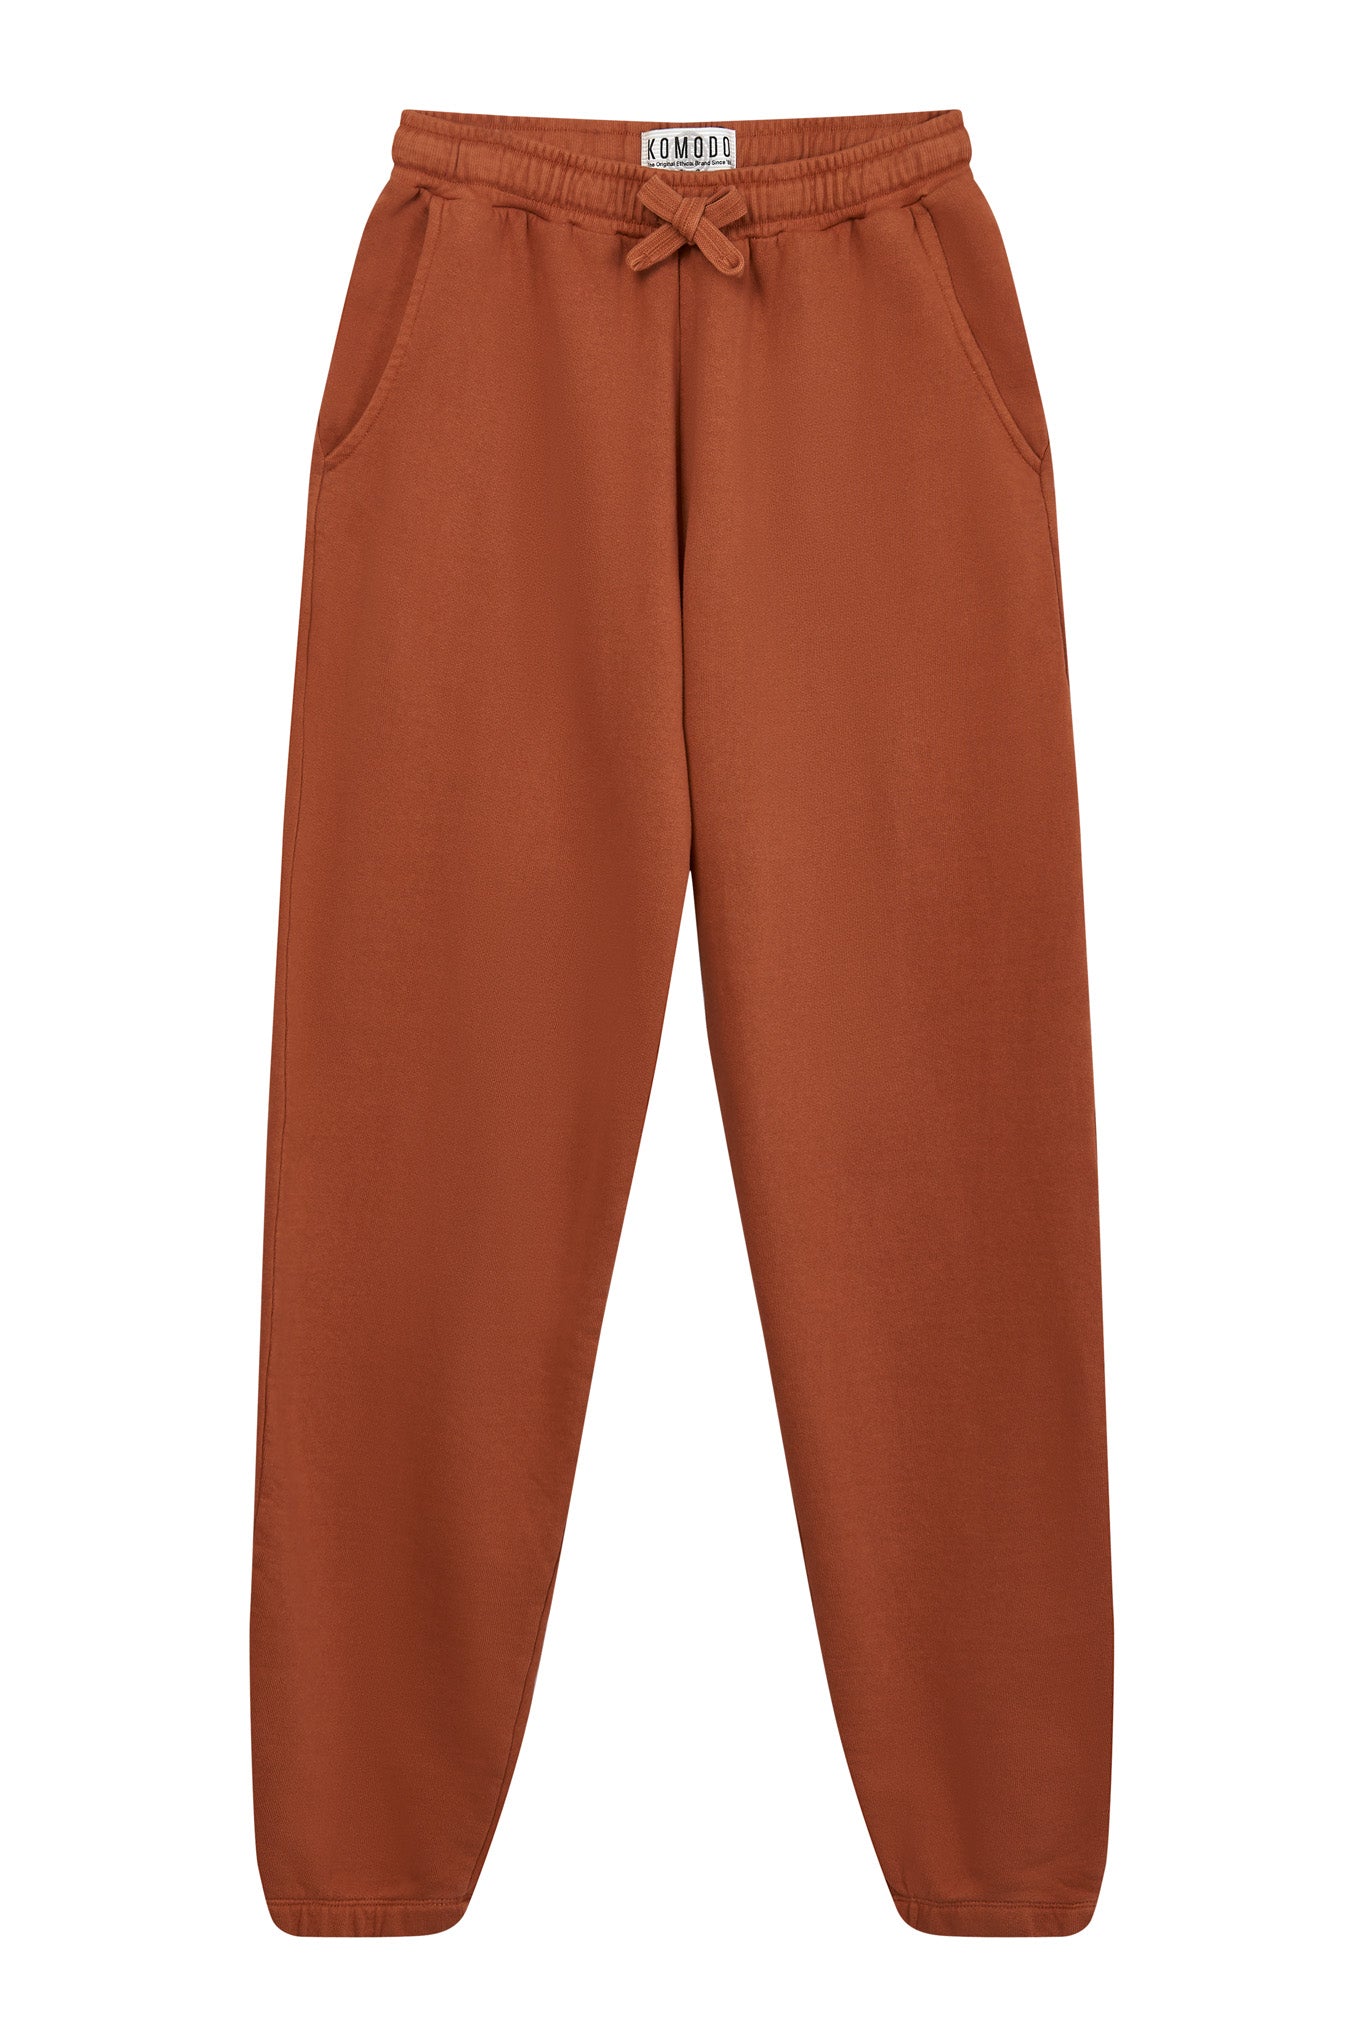 Dark orange ADAM jogging pants made of organic cotton by Komodo